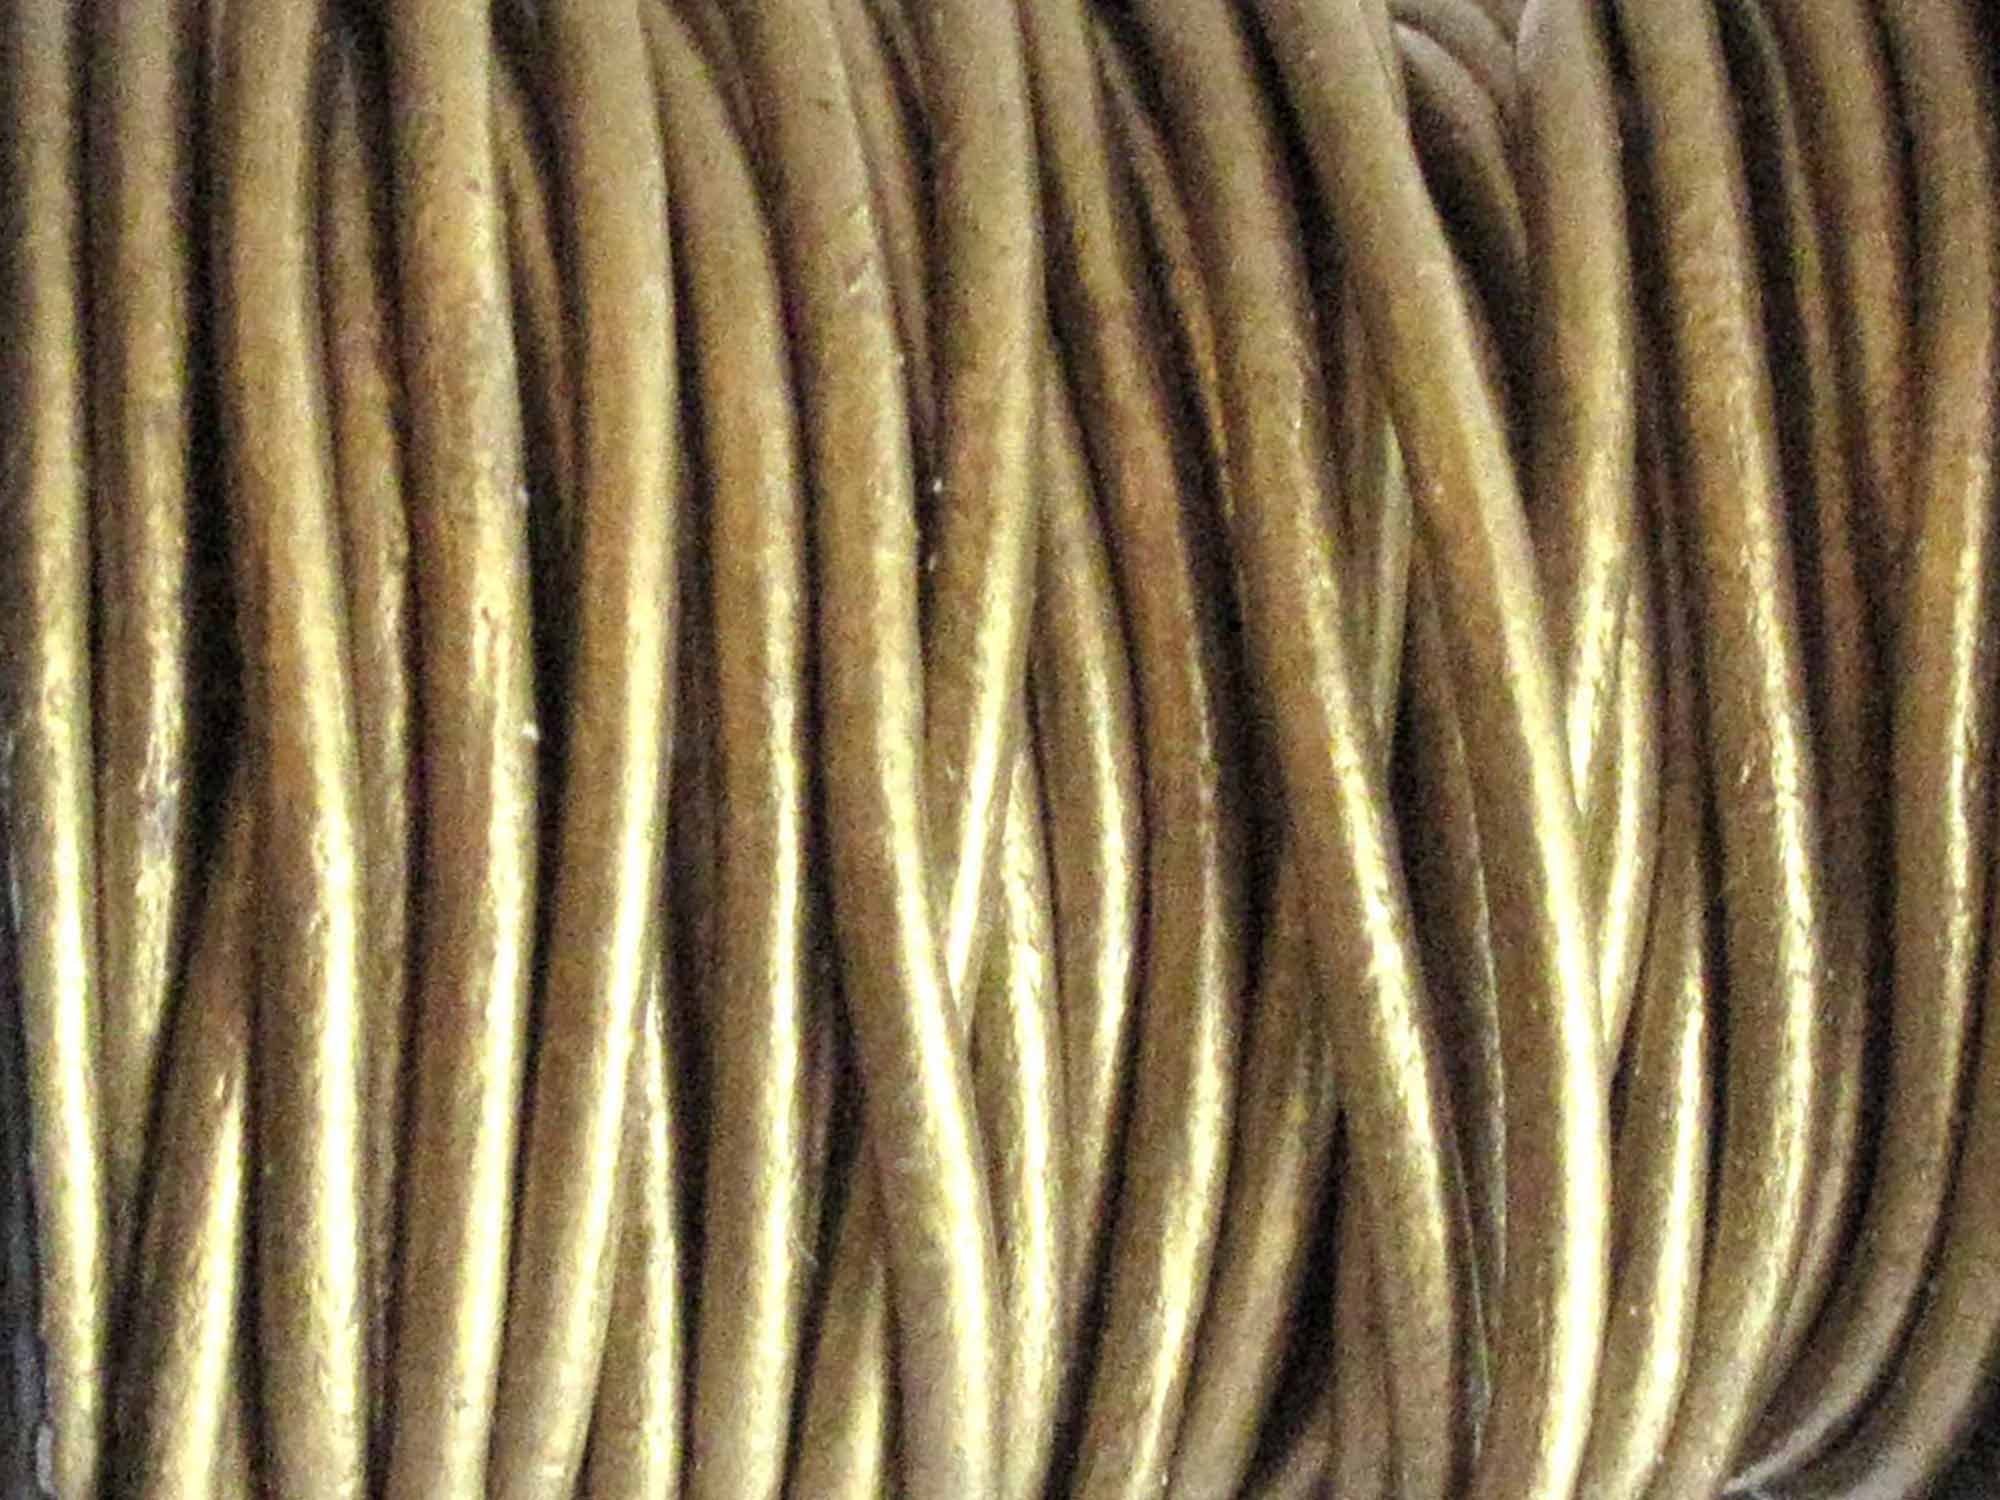 Metallic Gold Tinsel Braided Cord, 1/16 inchx100 Yards, Women's